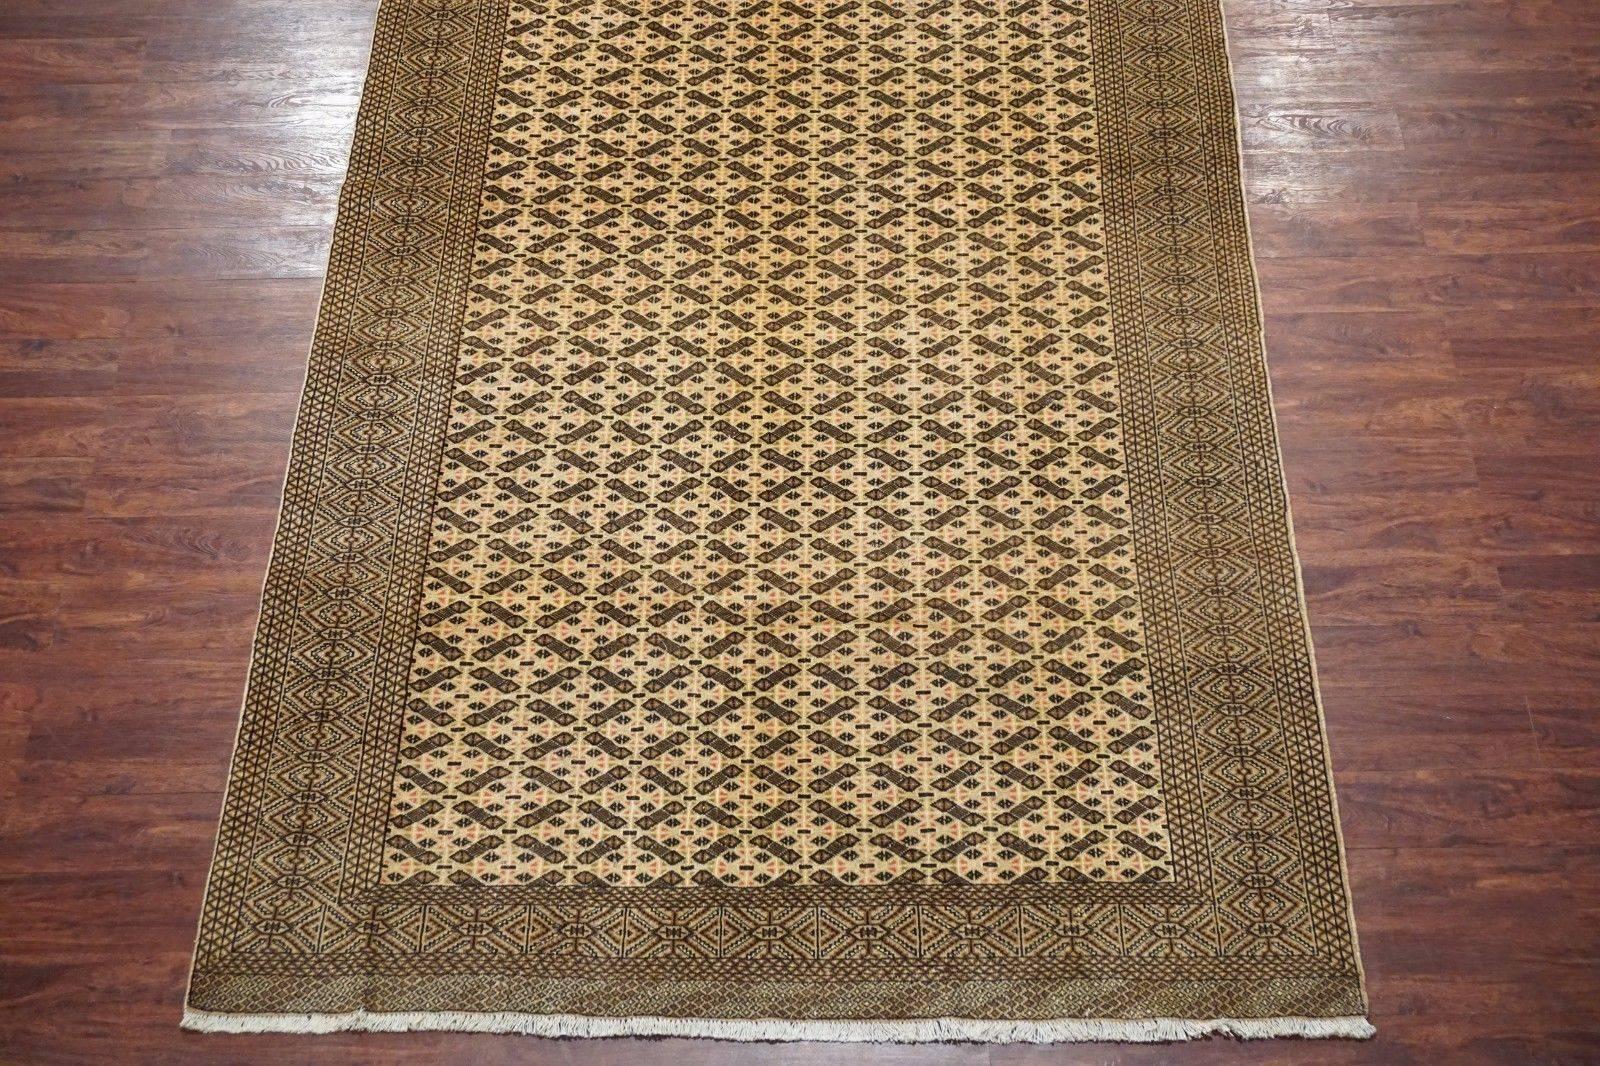 Beige Persian Turkoman rug

circa 1940

Measures: 6' 7